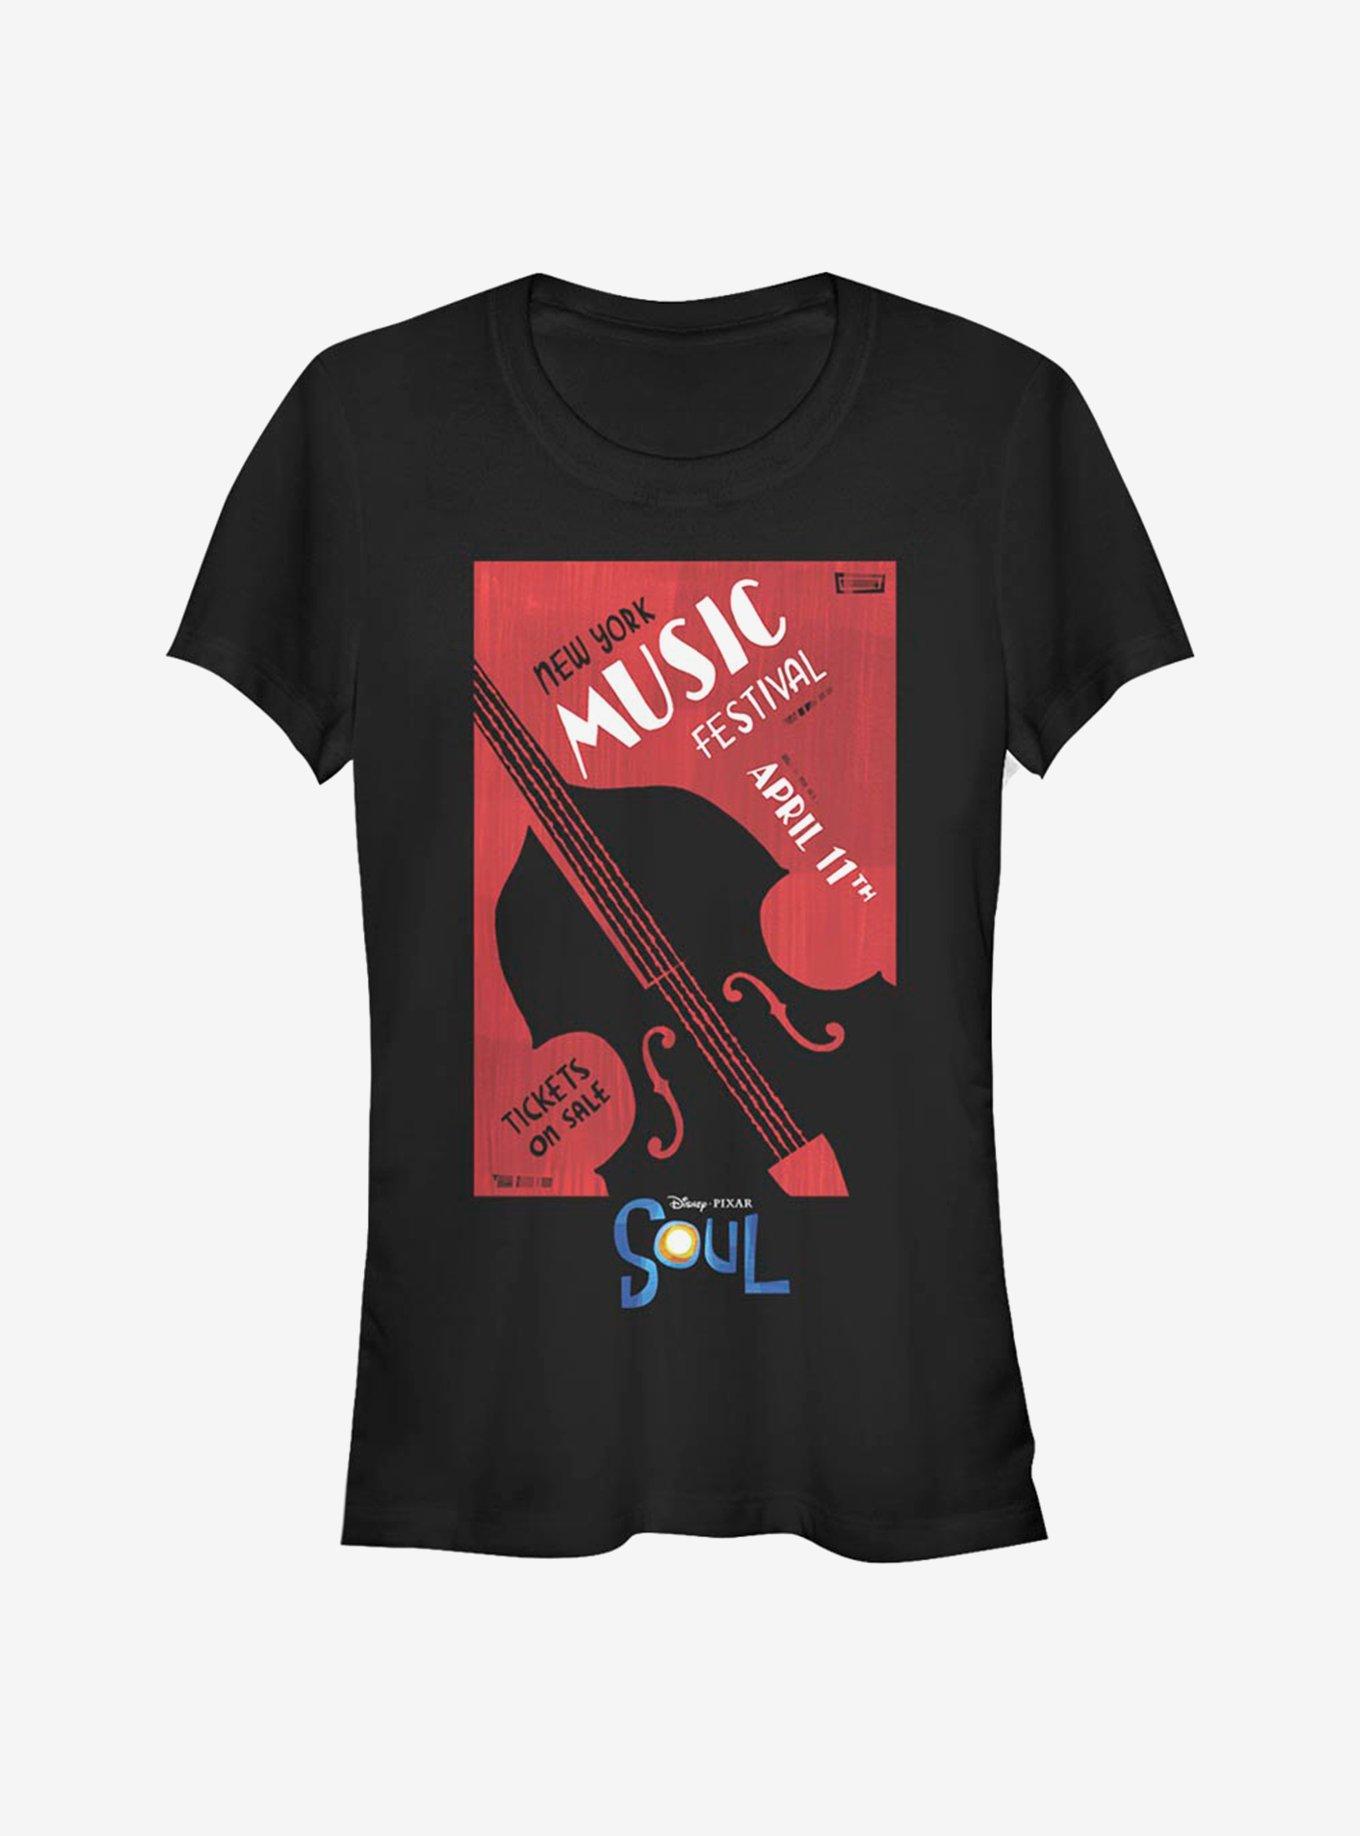 Disney Pixar Soul NY Music Festival Girls T-Shirt, BLACK, hi-res